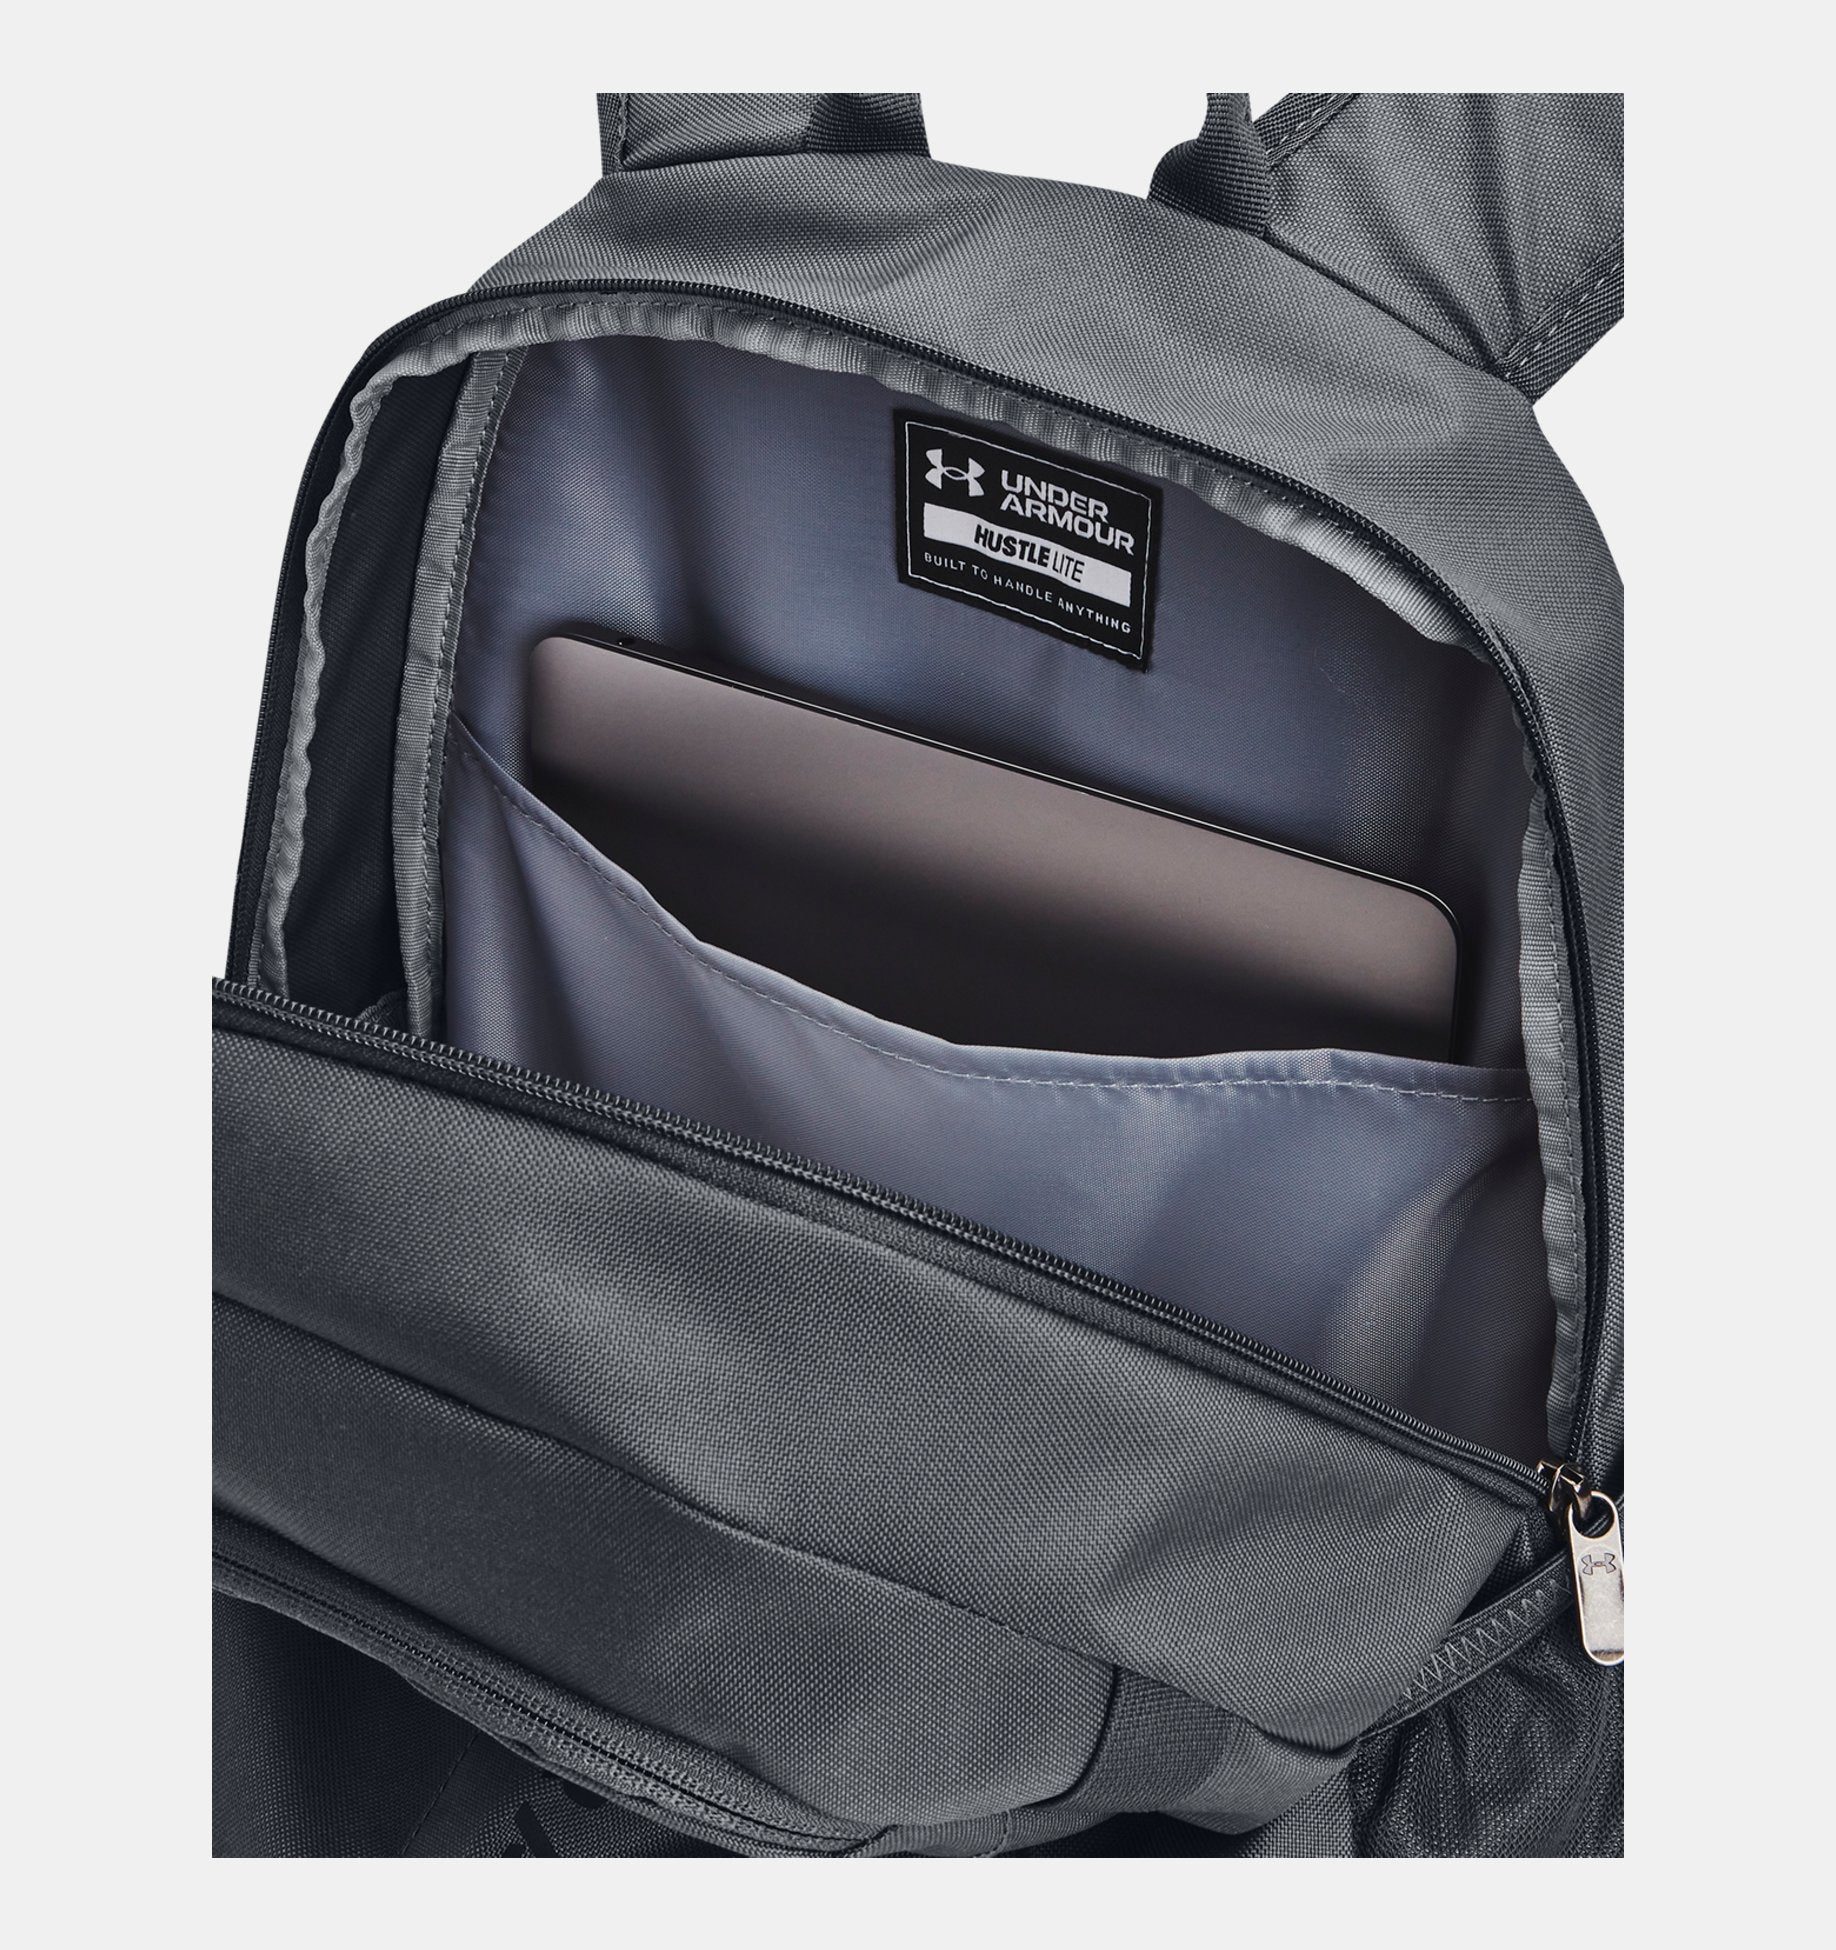 Under Armour Men's Hustle Lite Backpack - Pitch Gray / Black